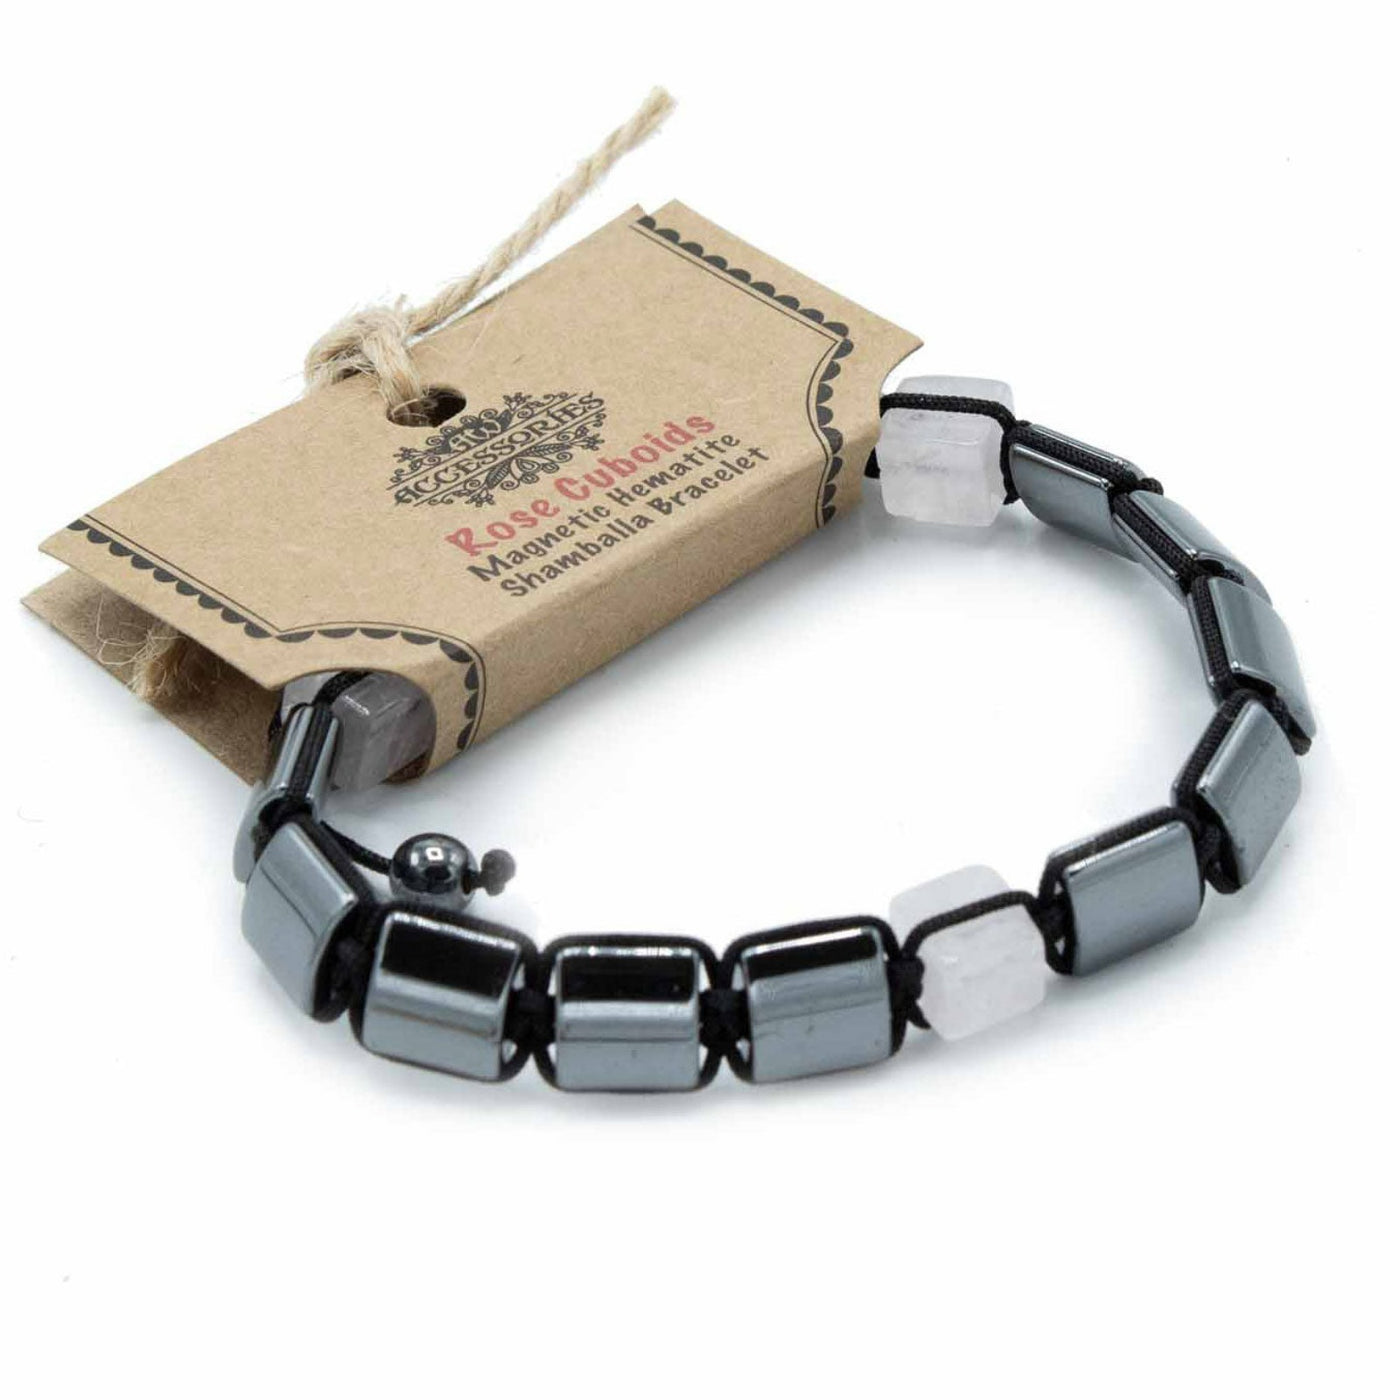 Unisex Hematite Squares And Rose Cube Beads Bracelet With Macrame Knot.